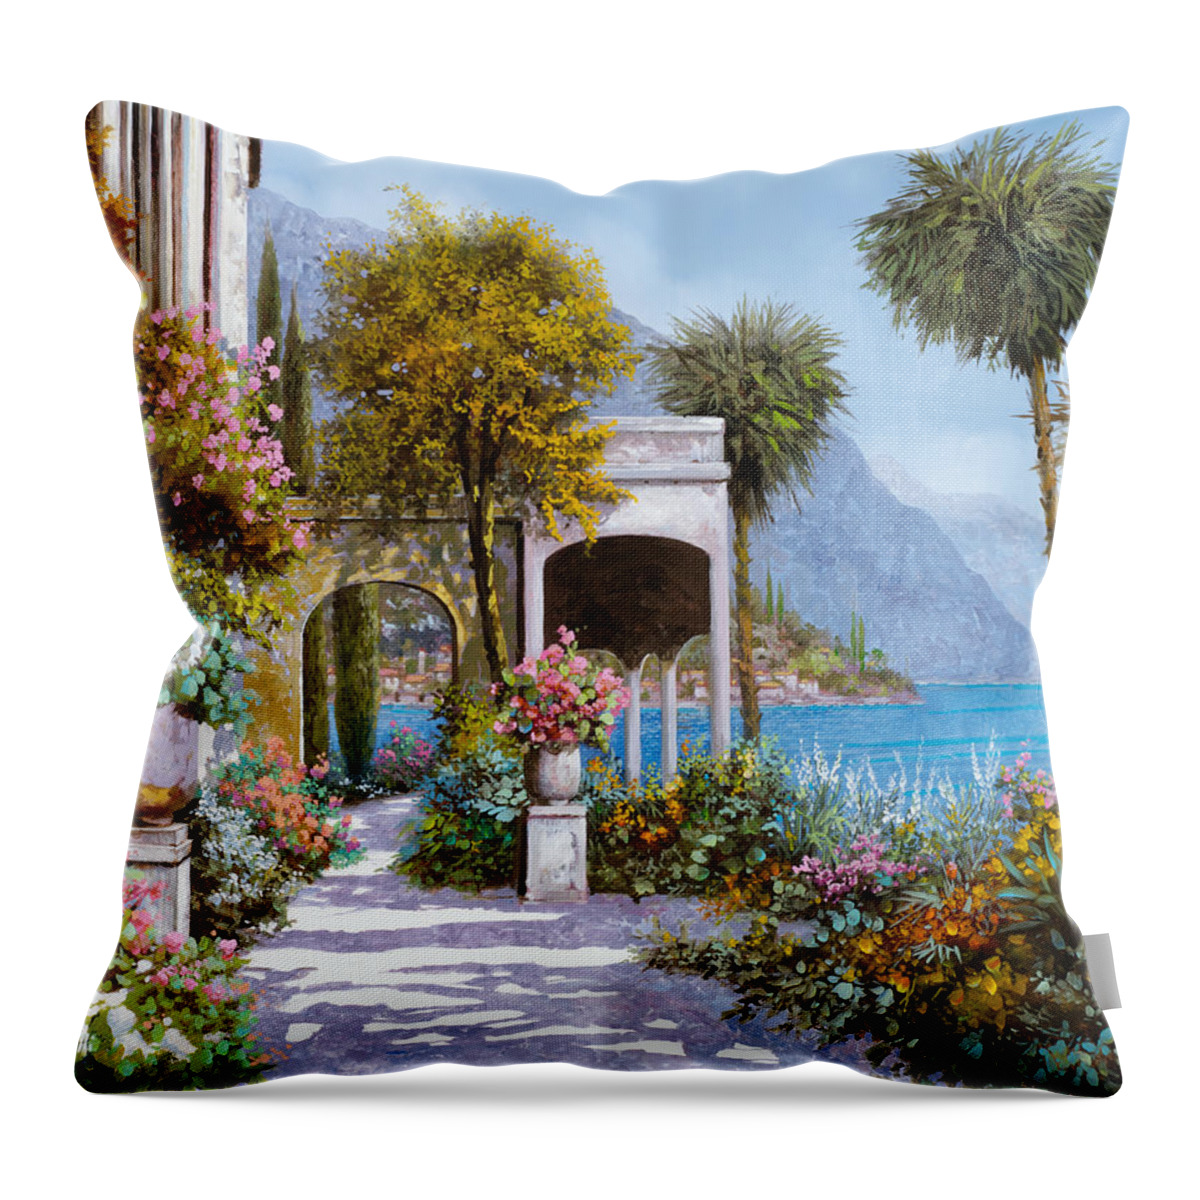 Lake Throw Pillow featuring the painting Lake Como-la passeggiata al lago by Guido Borelli